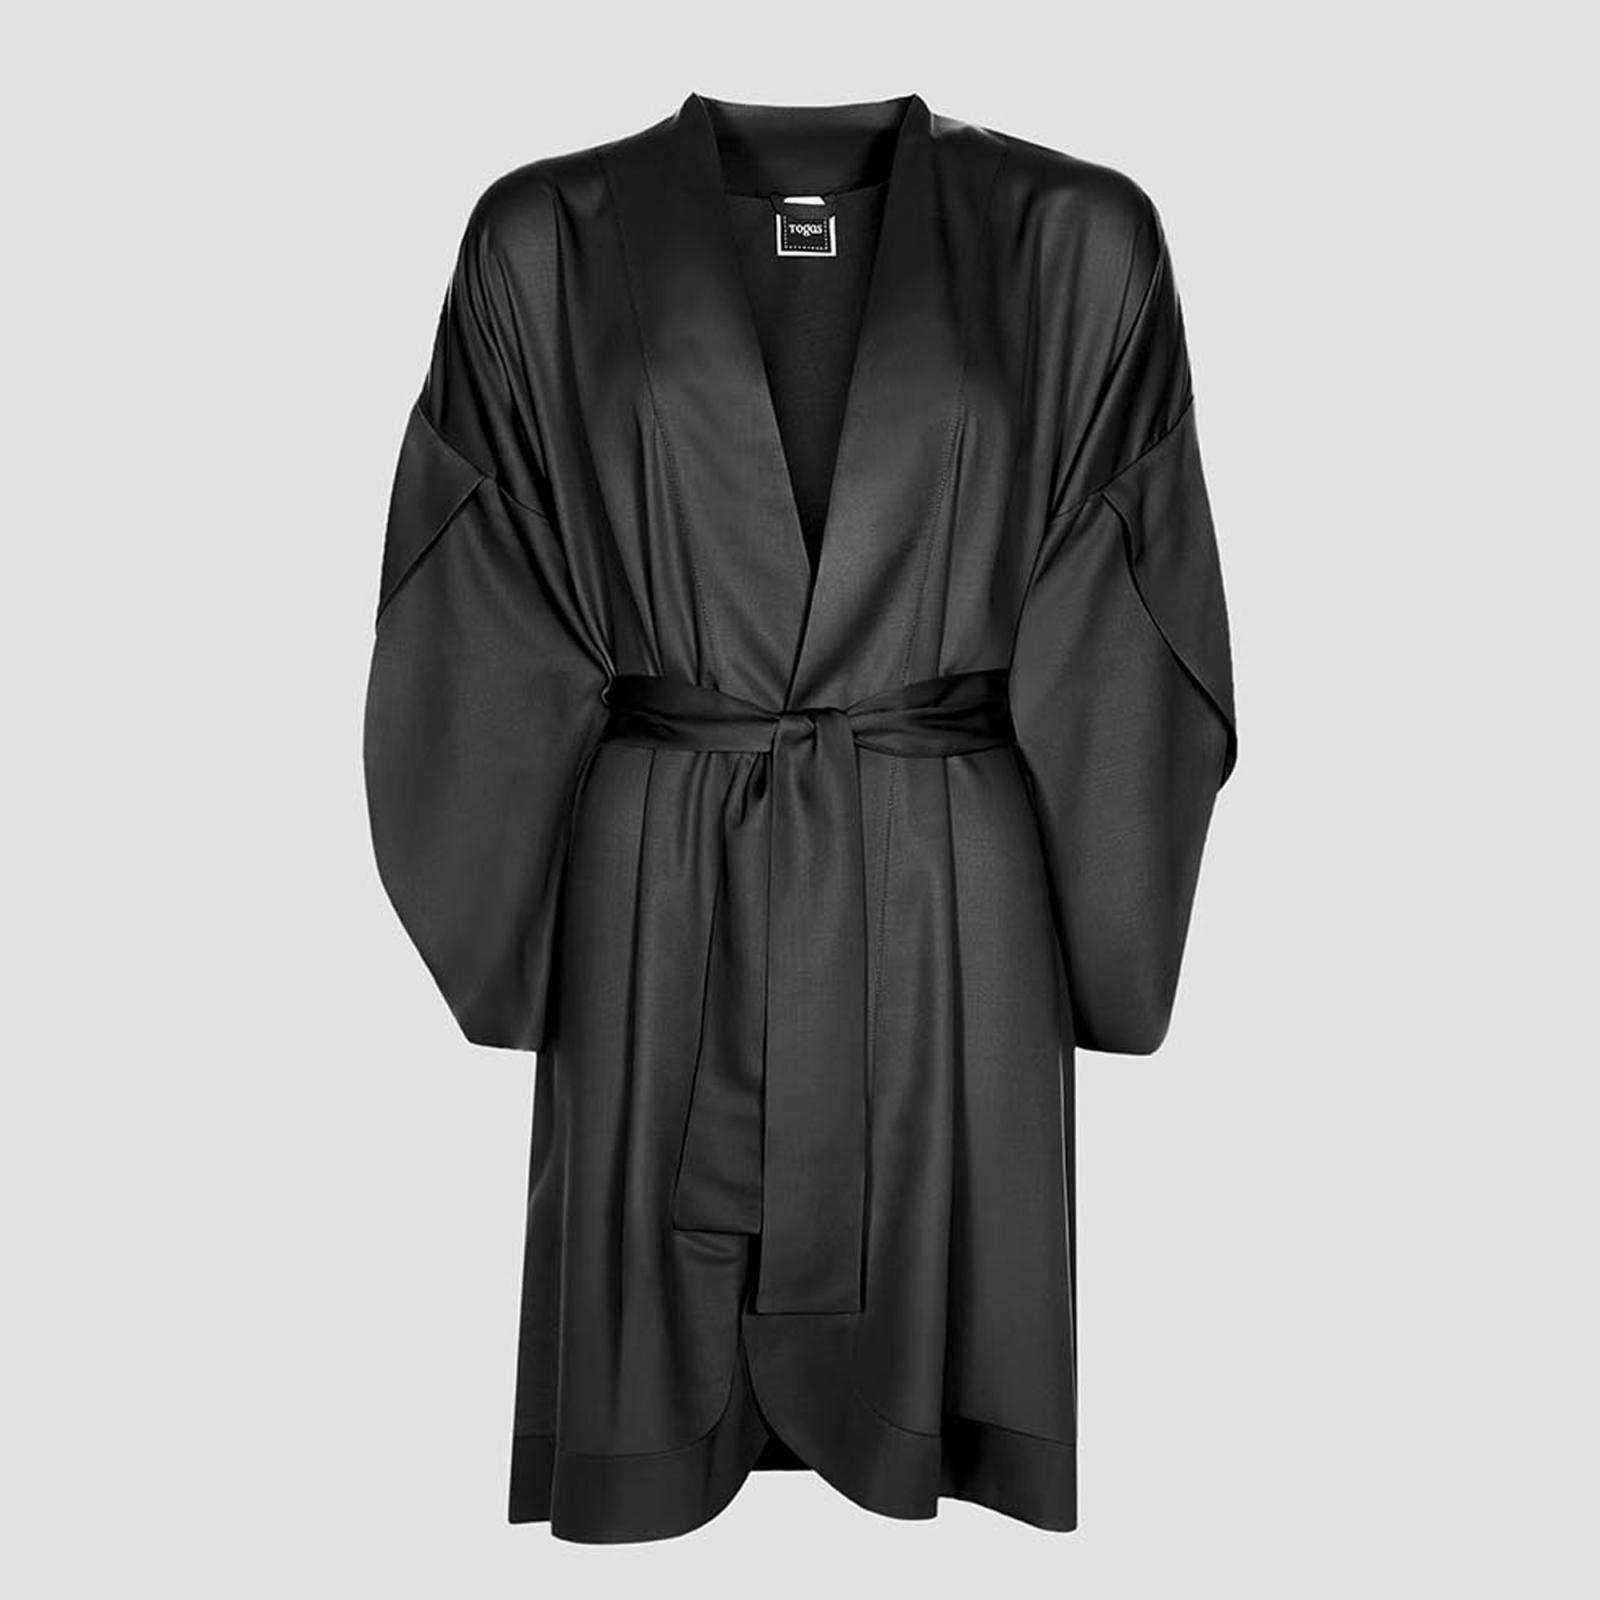 Халат-кимоно короткое Togas Наоми чёрное XL (50) халат кимоно togas наоми розовый xxl 52